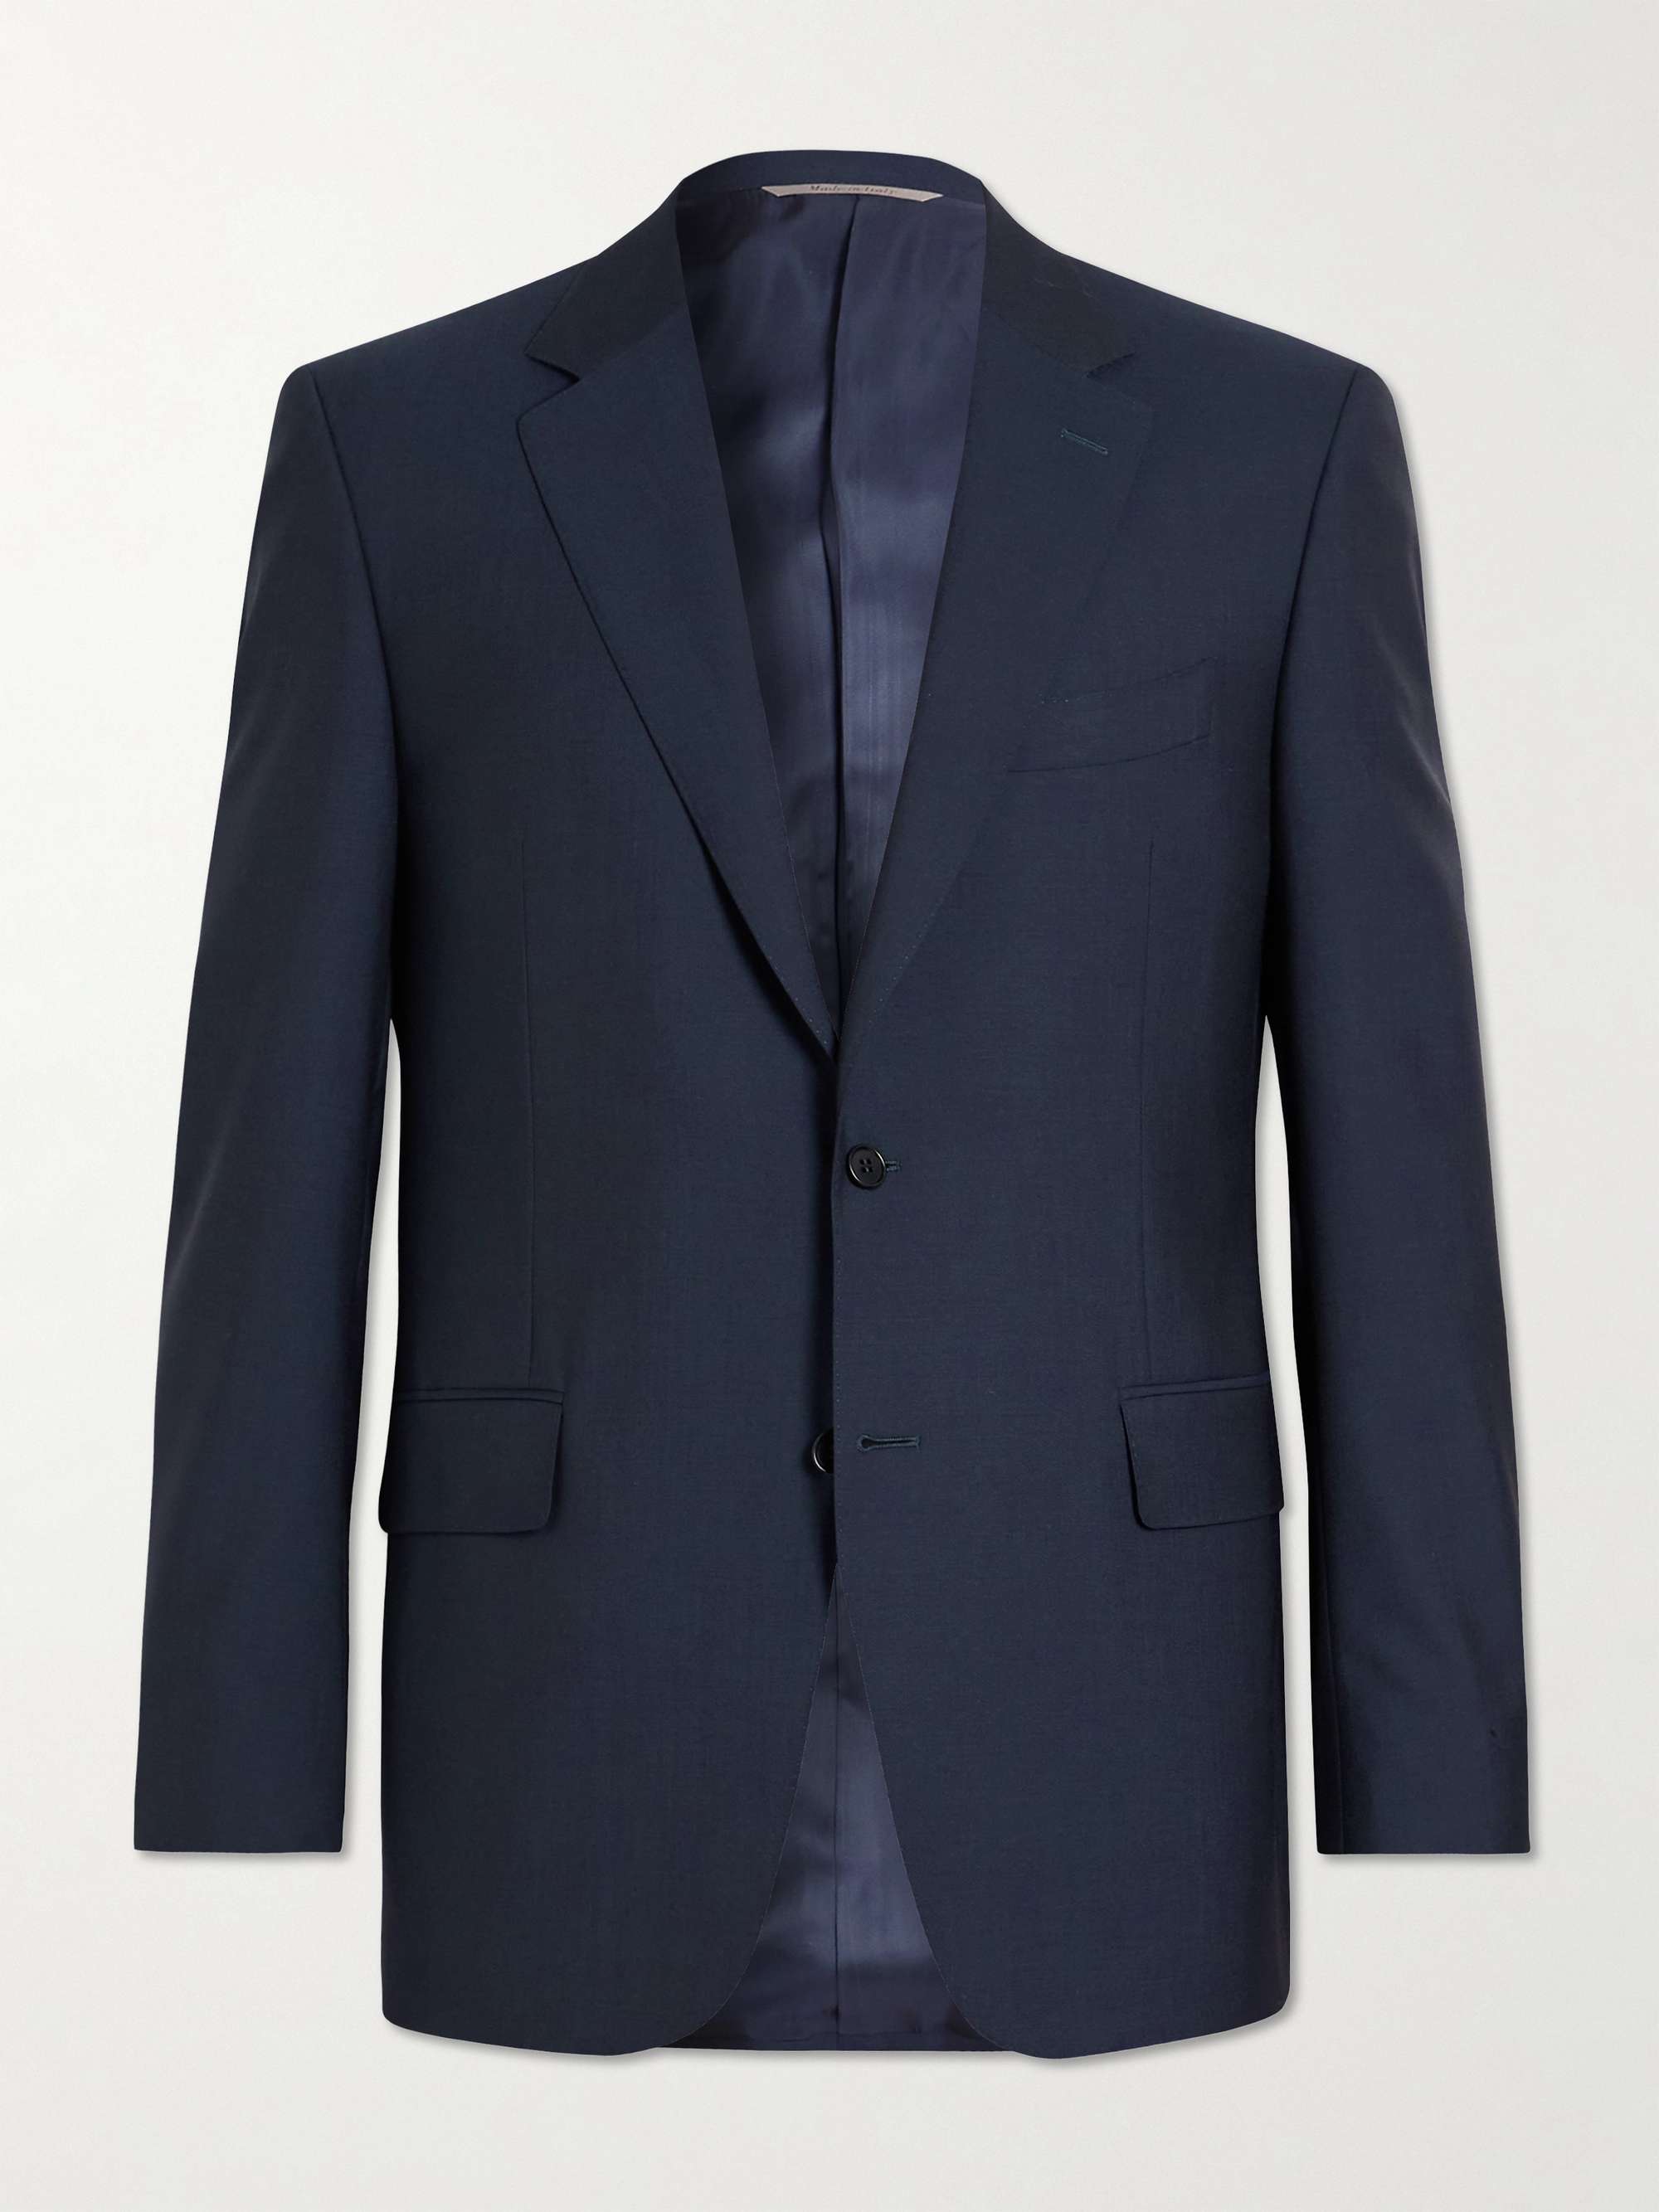 CANALI Slim-Fit Wool Suit Jacket for Men | MR PORTER